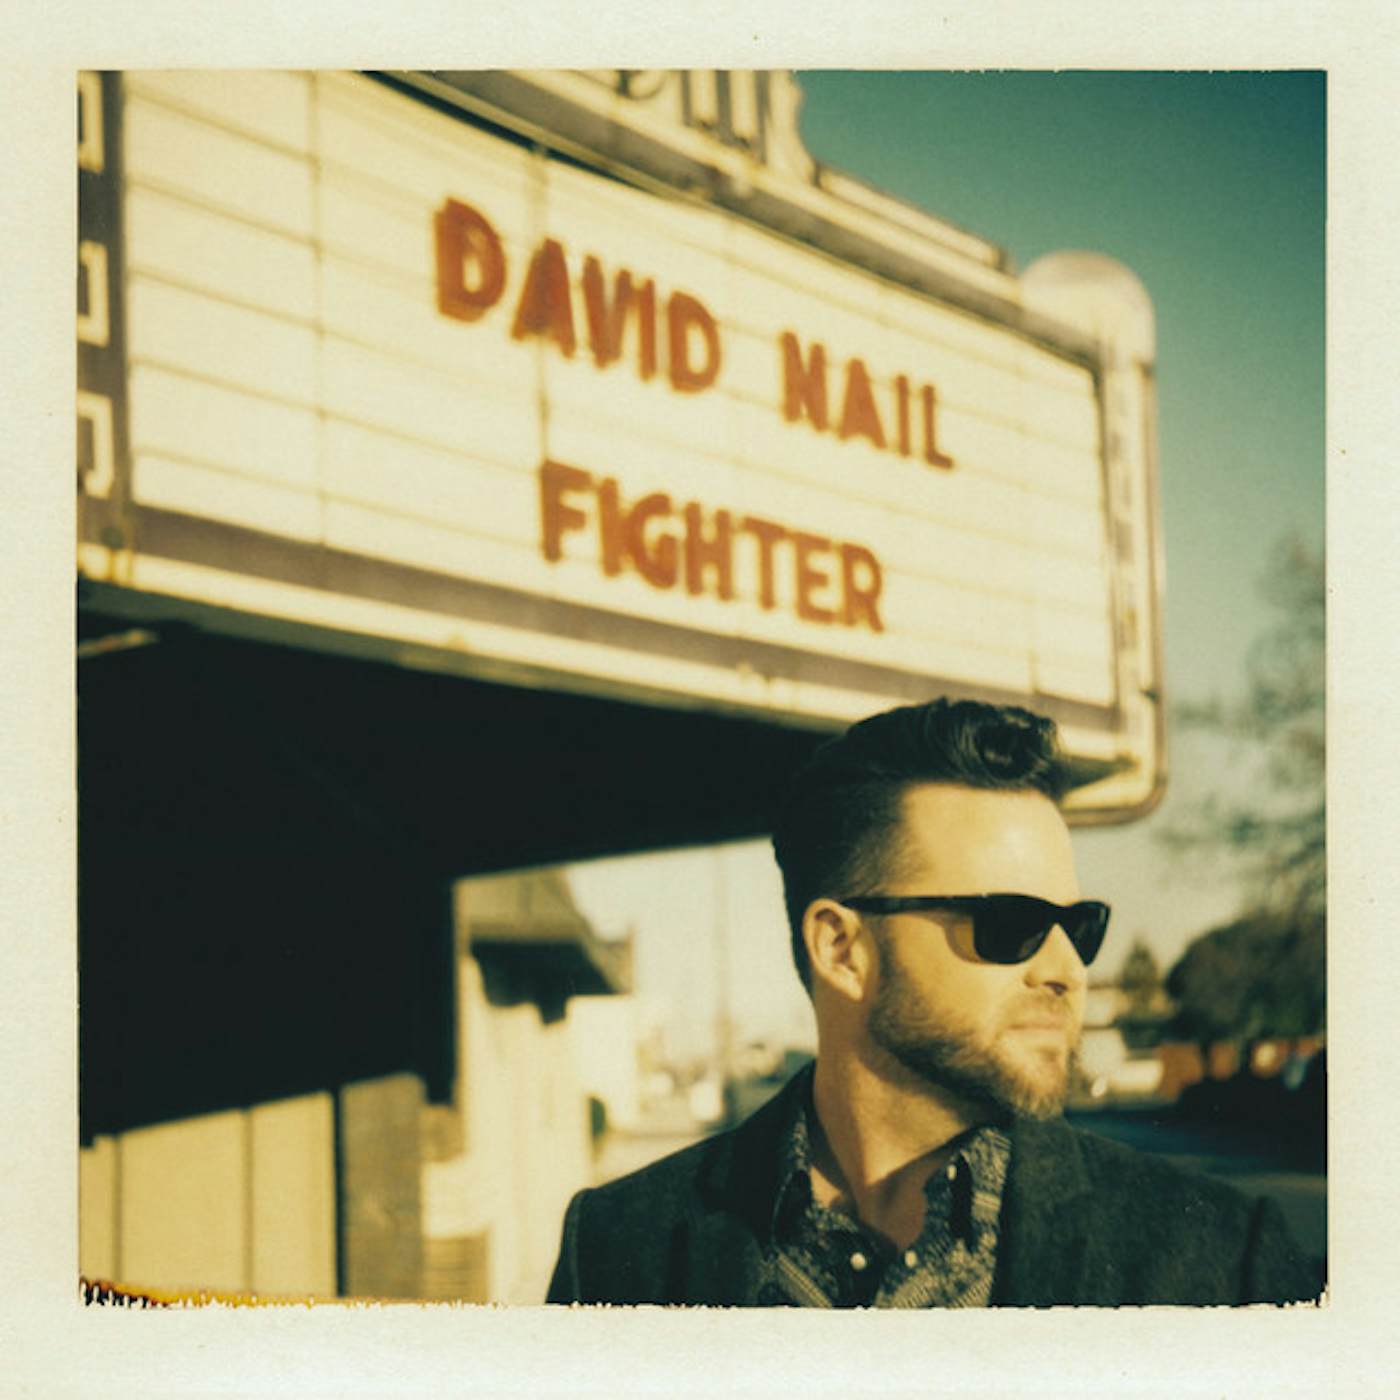 David Nail Fighter Vinyl Record